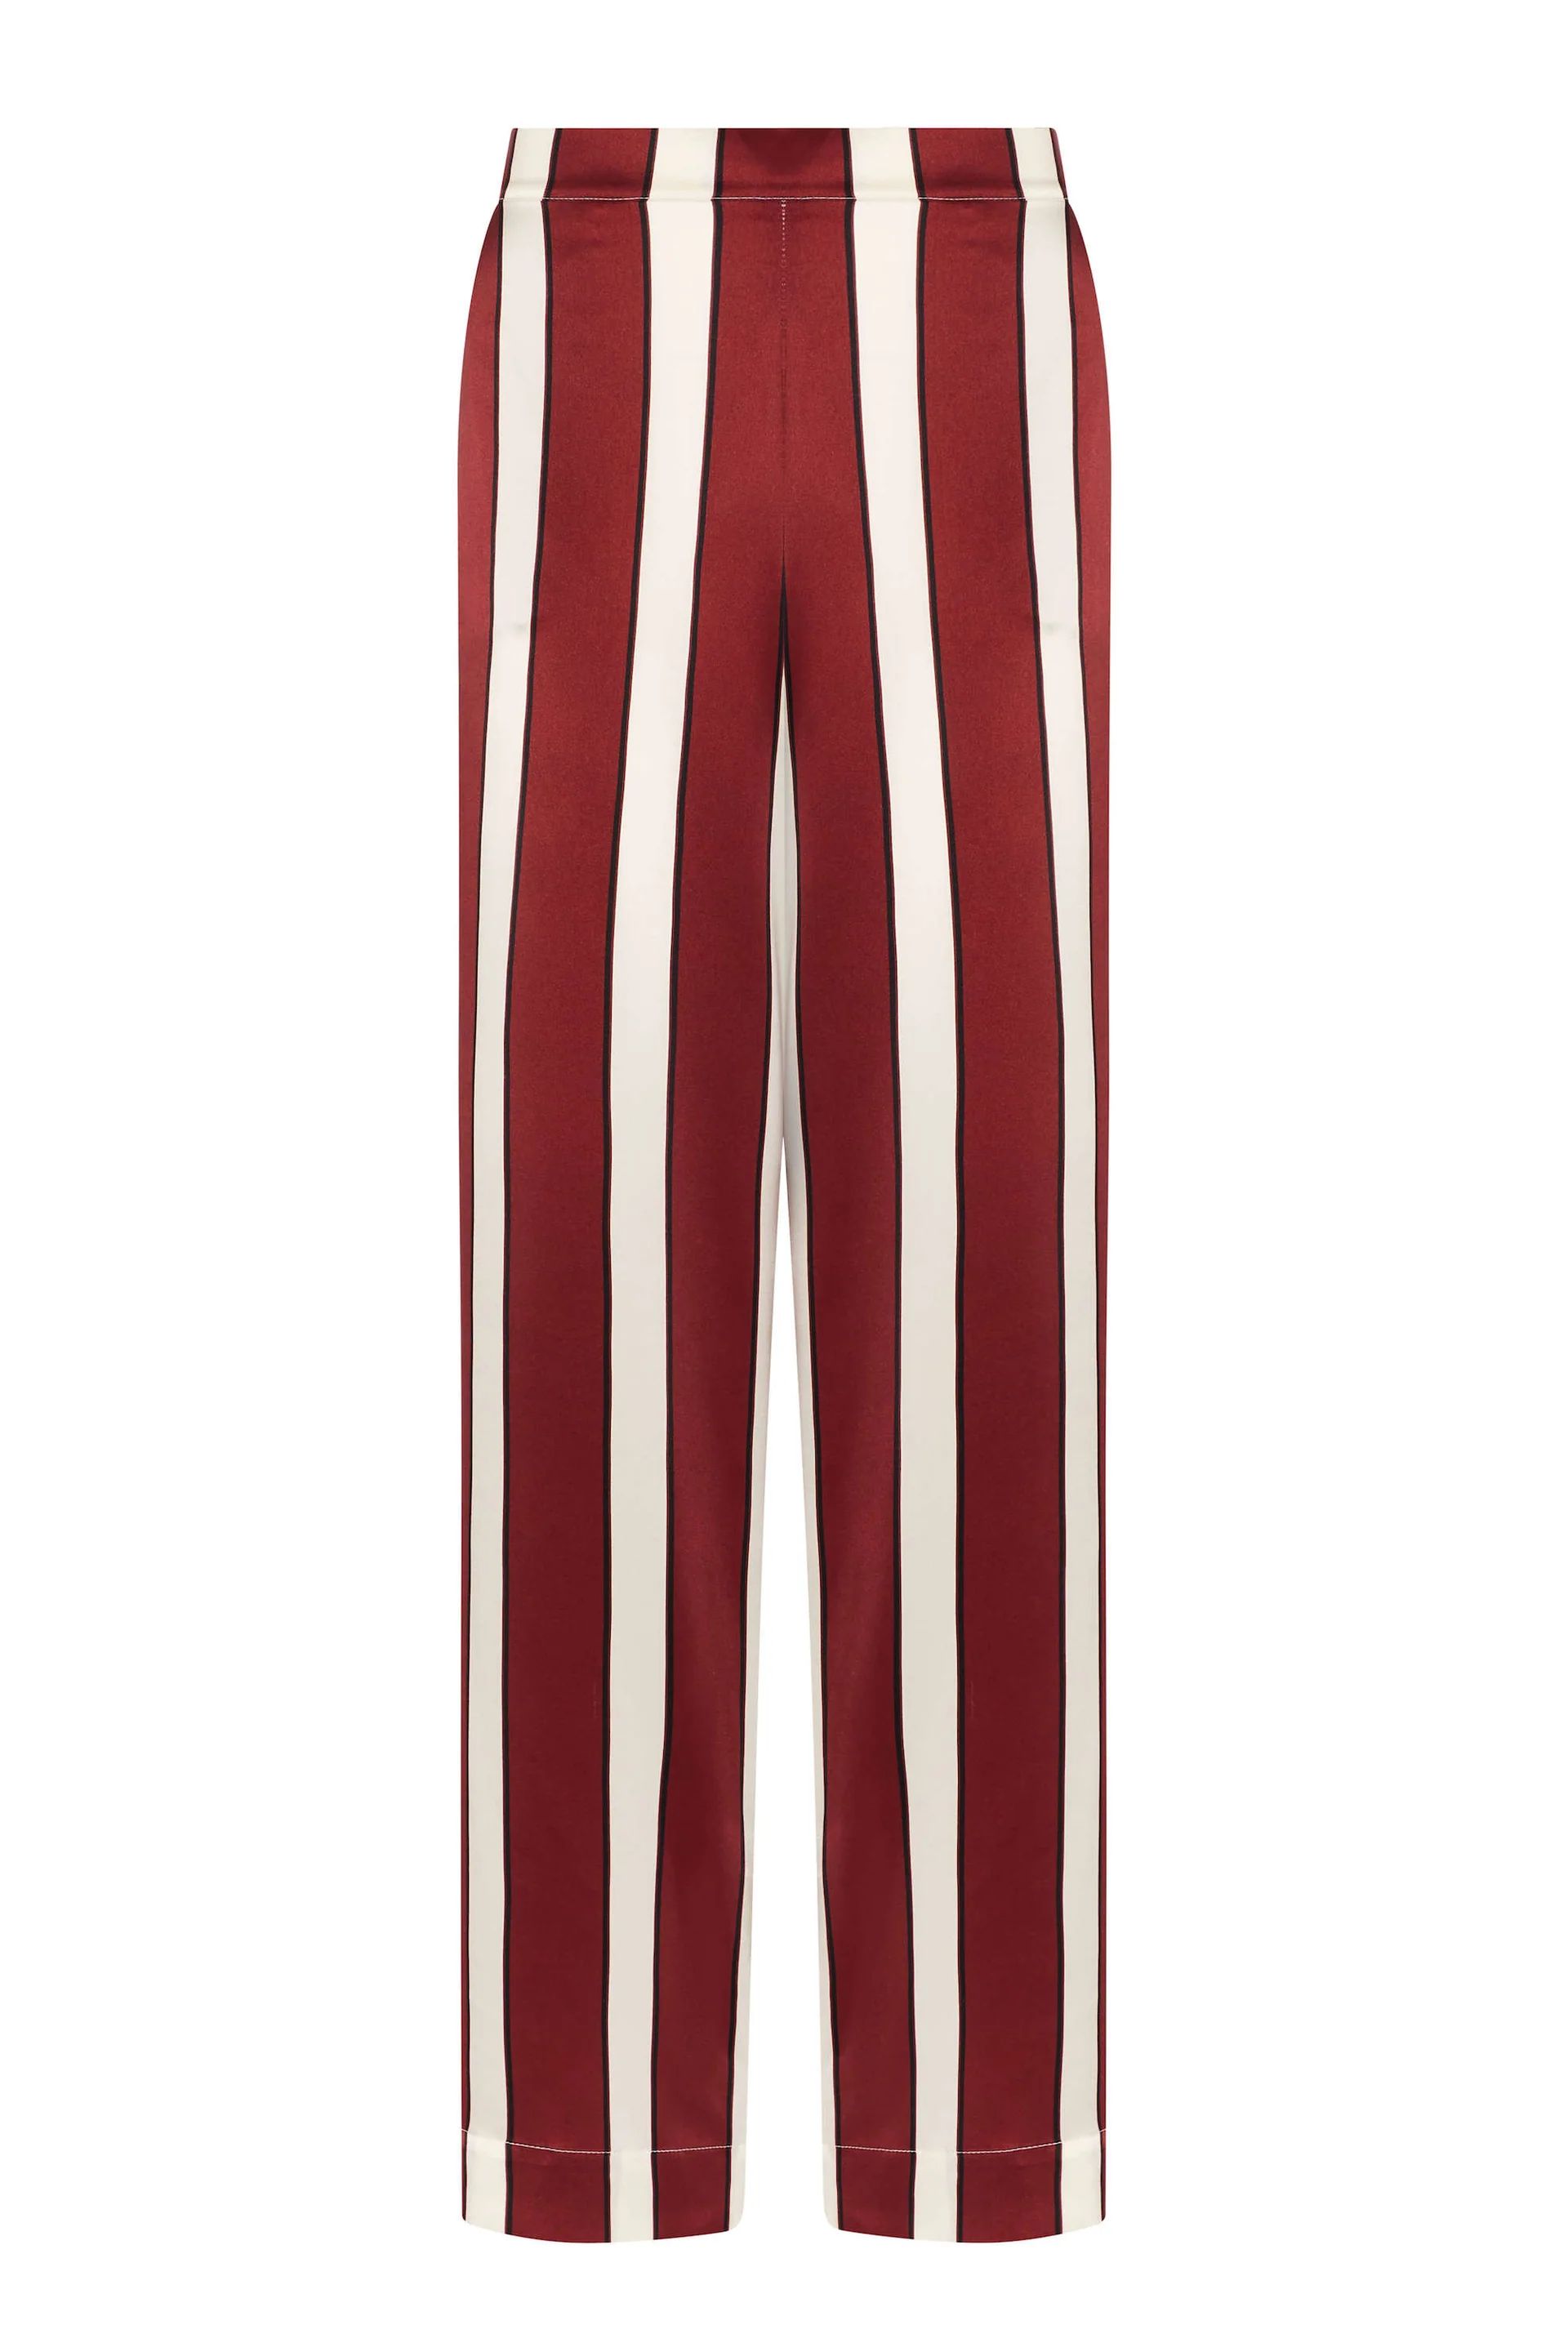 London
      
Pyjama
      
Bottom
      
Ruby
      
Bold
      
Stripe
      
Silk
      
Charm... | ASCENO